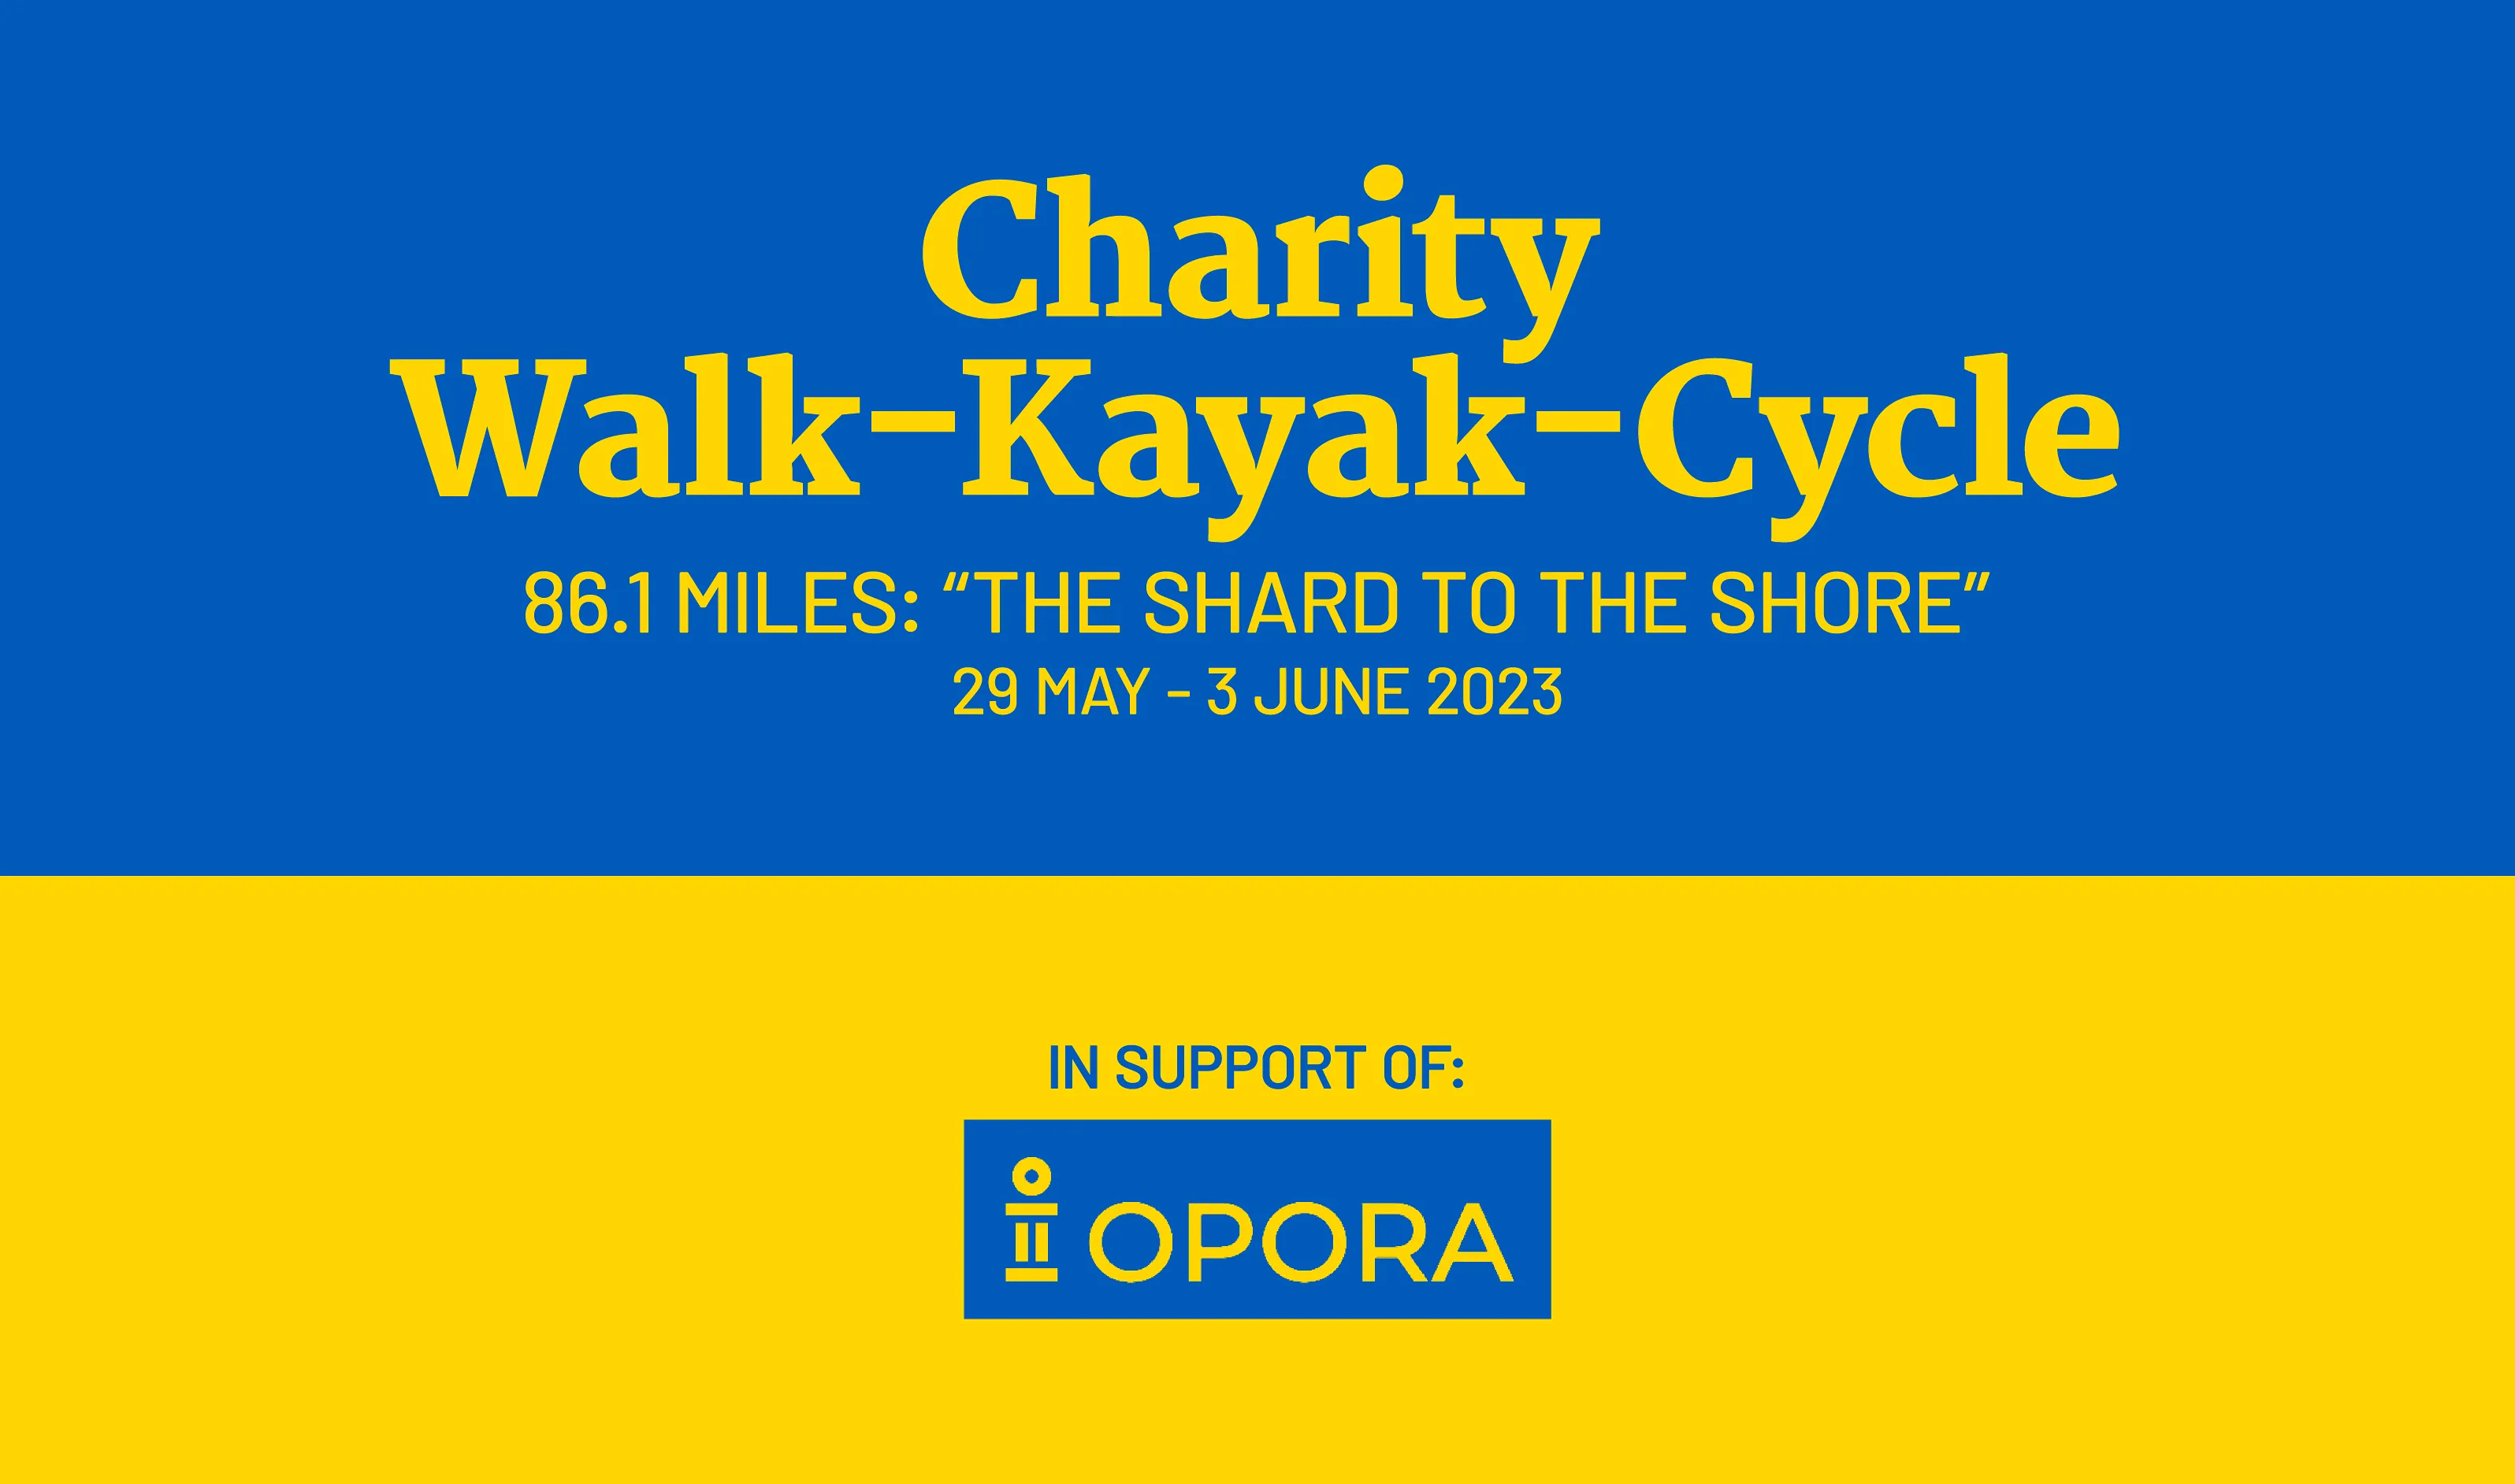 Charity Walk-Kayak-Cycle for Opora